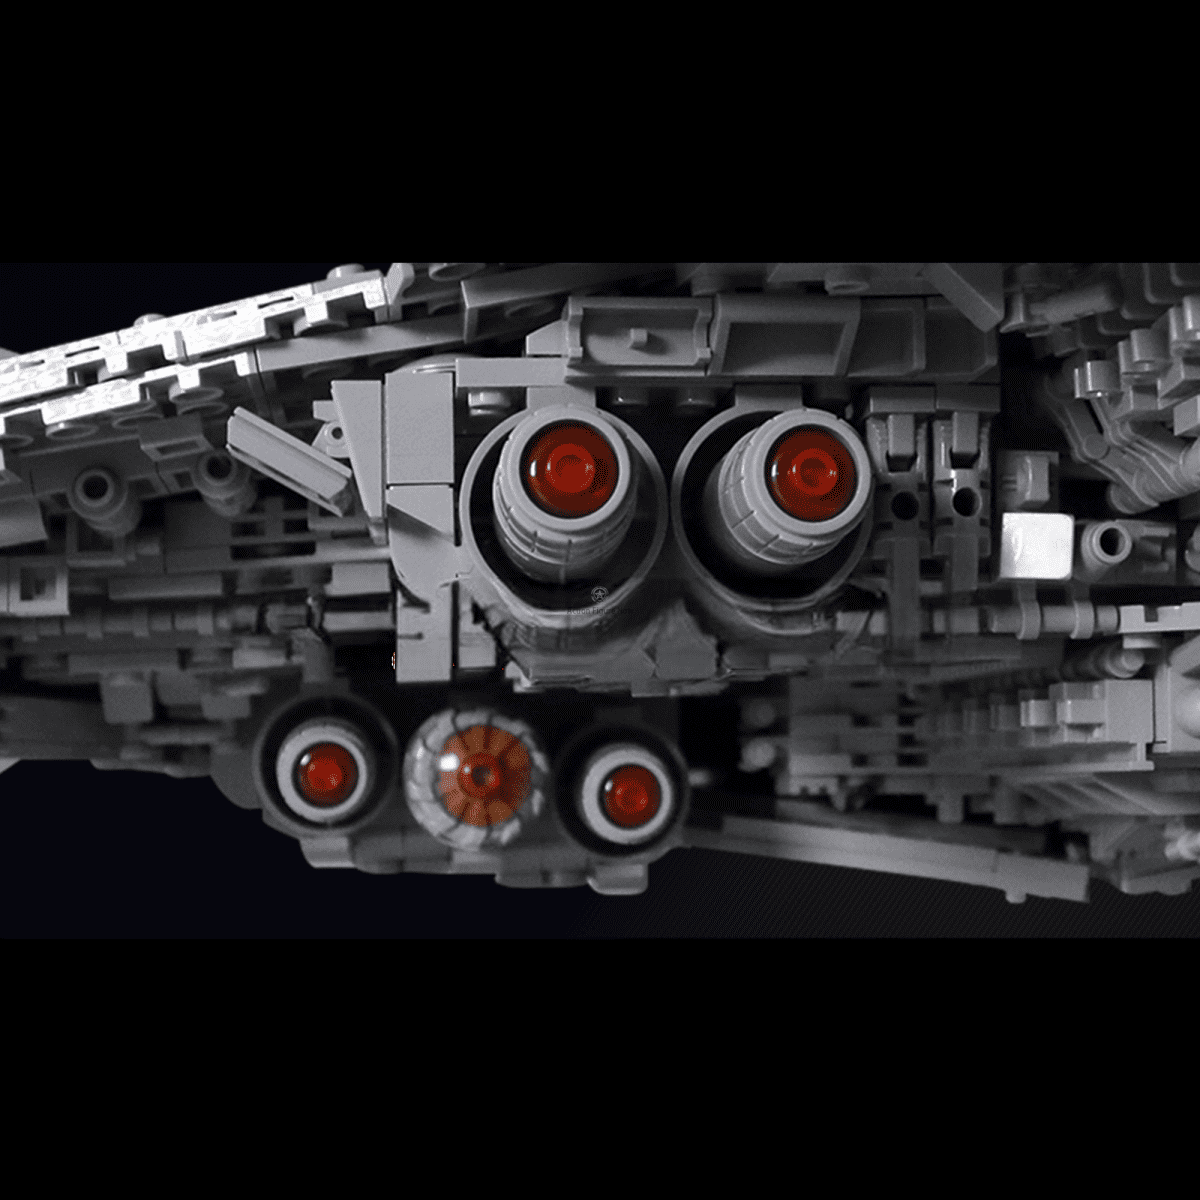 ActionFigureNow 13134 Executor Super Star Destroyer Kit | Star Wars Space Series | 7,588 Pieces Building Set